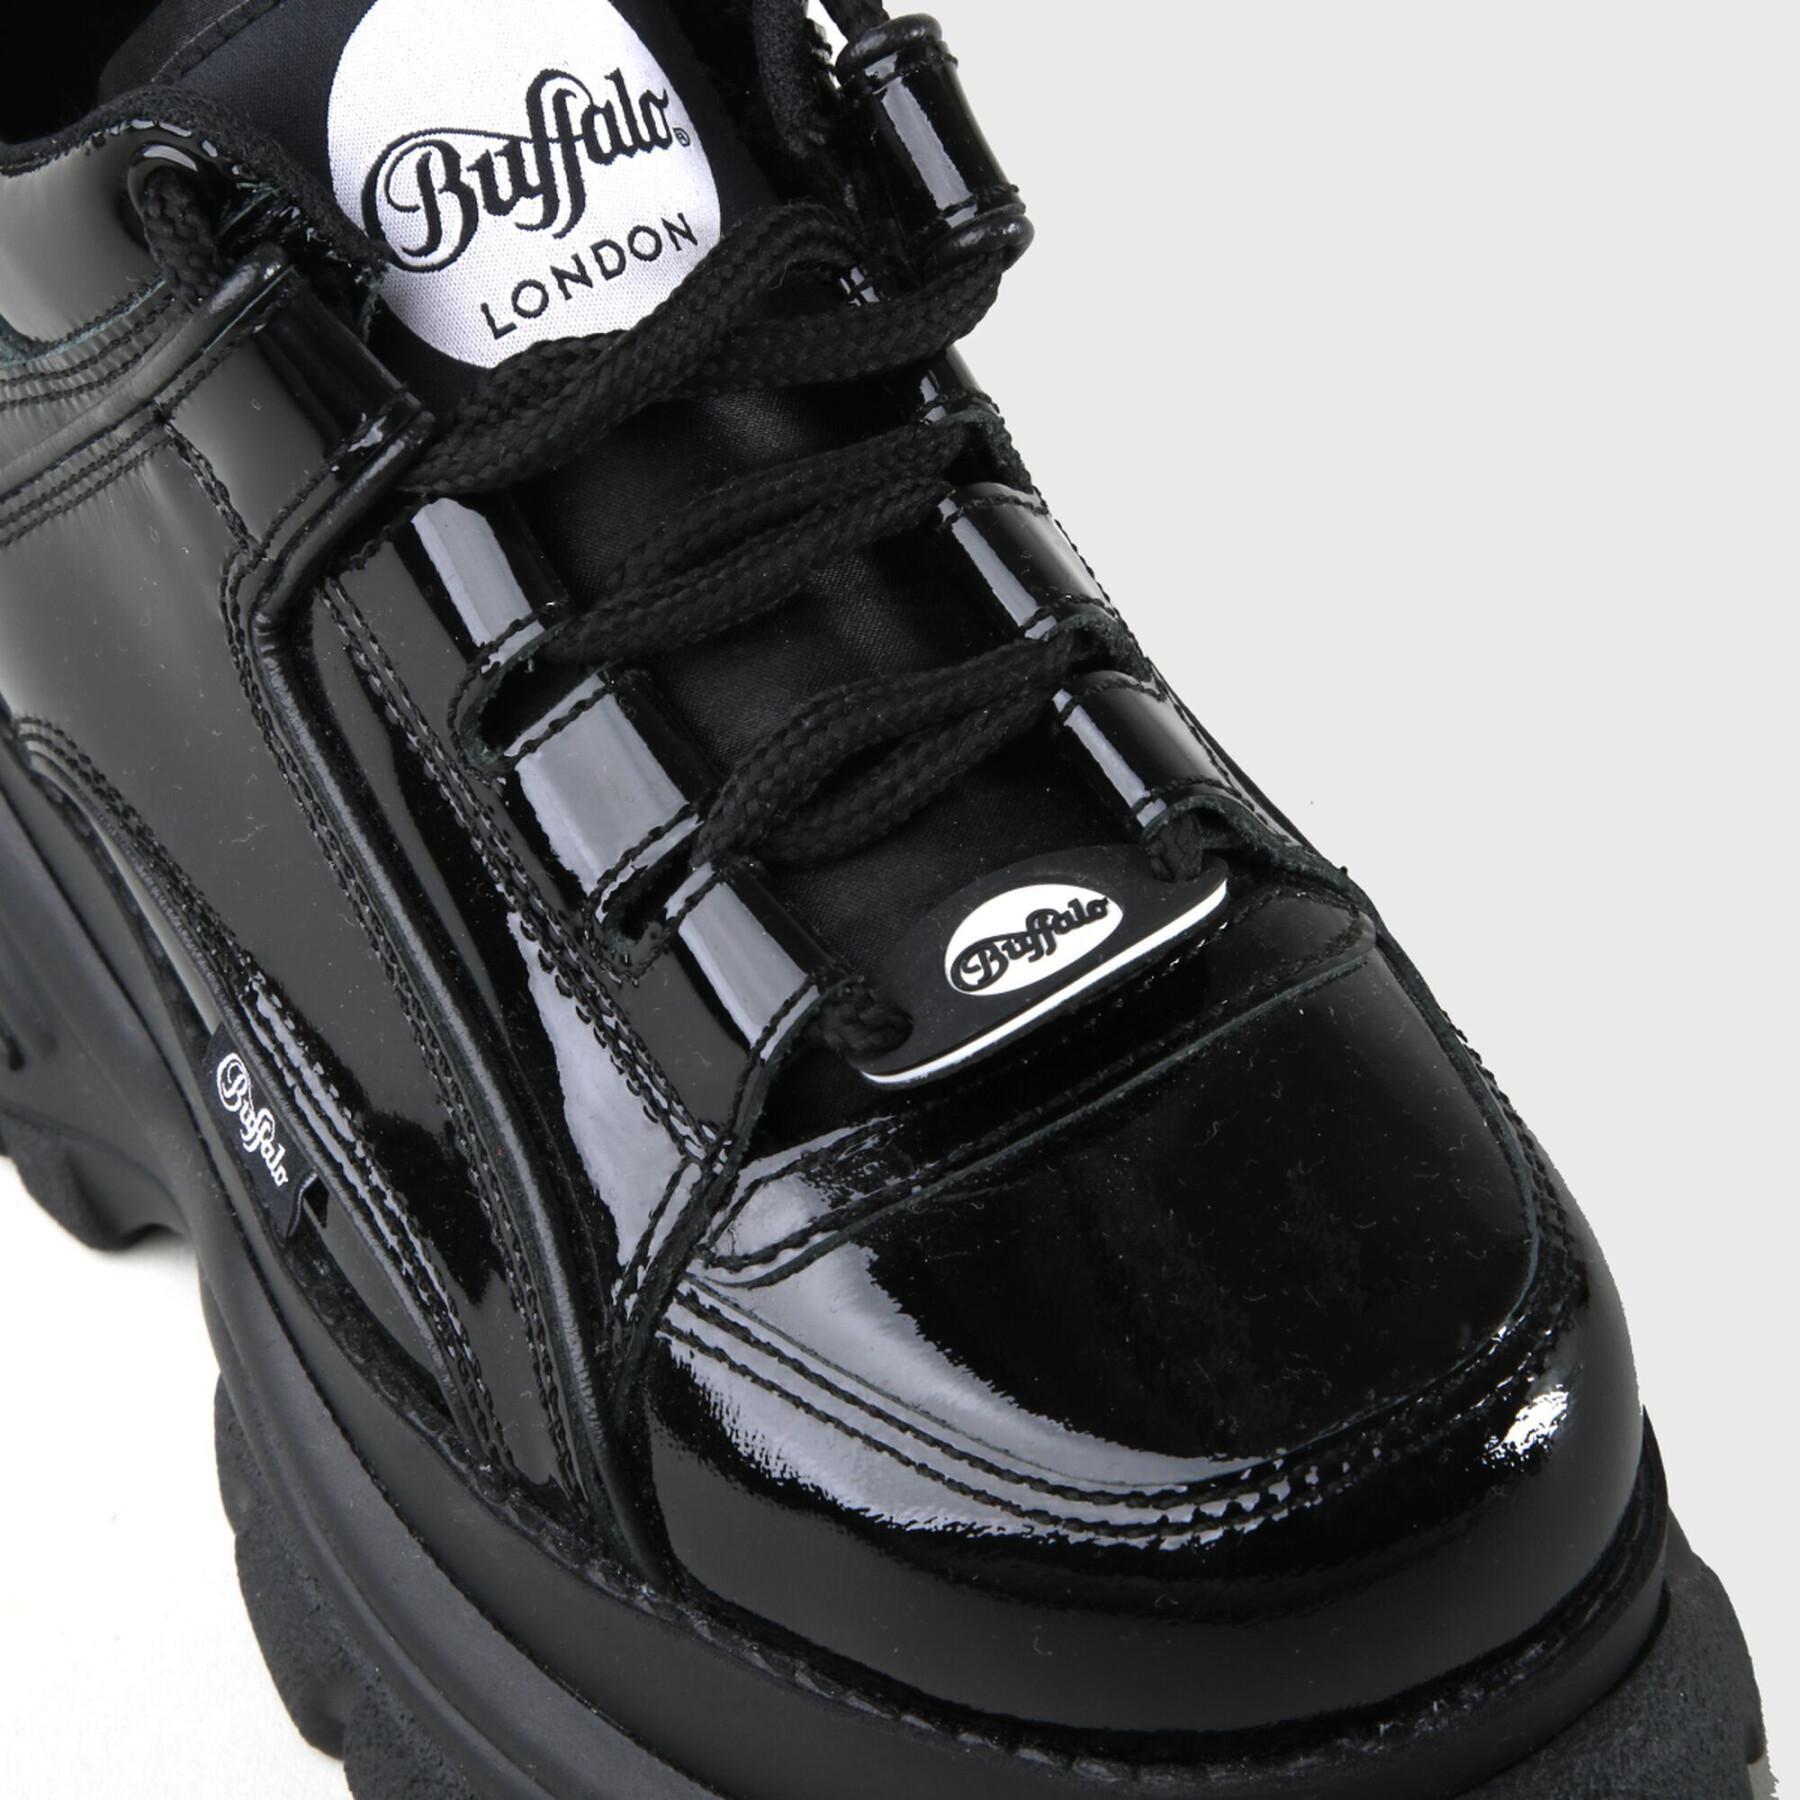 Buffalo classic kick patent leather women's shoes